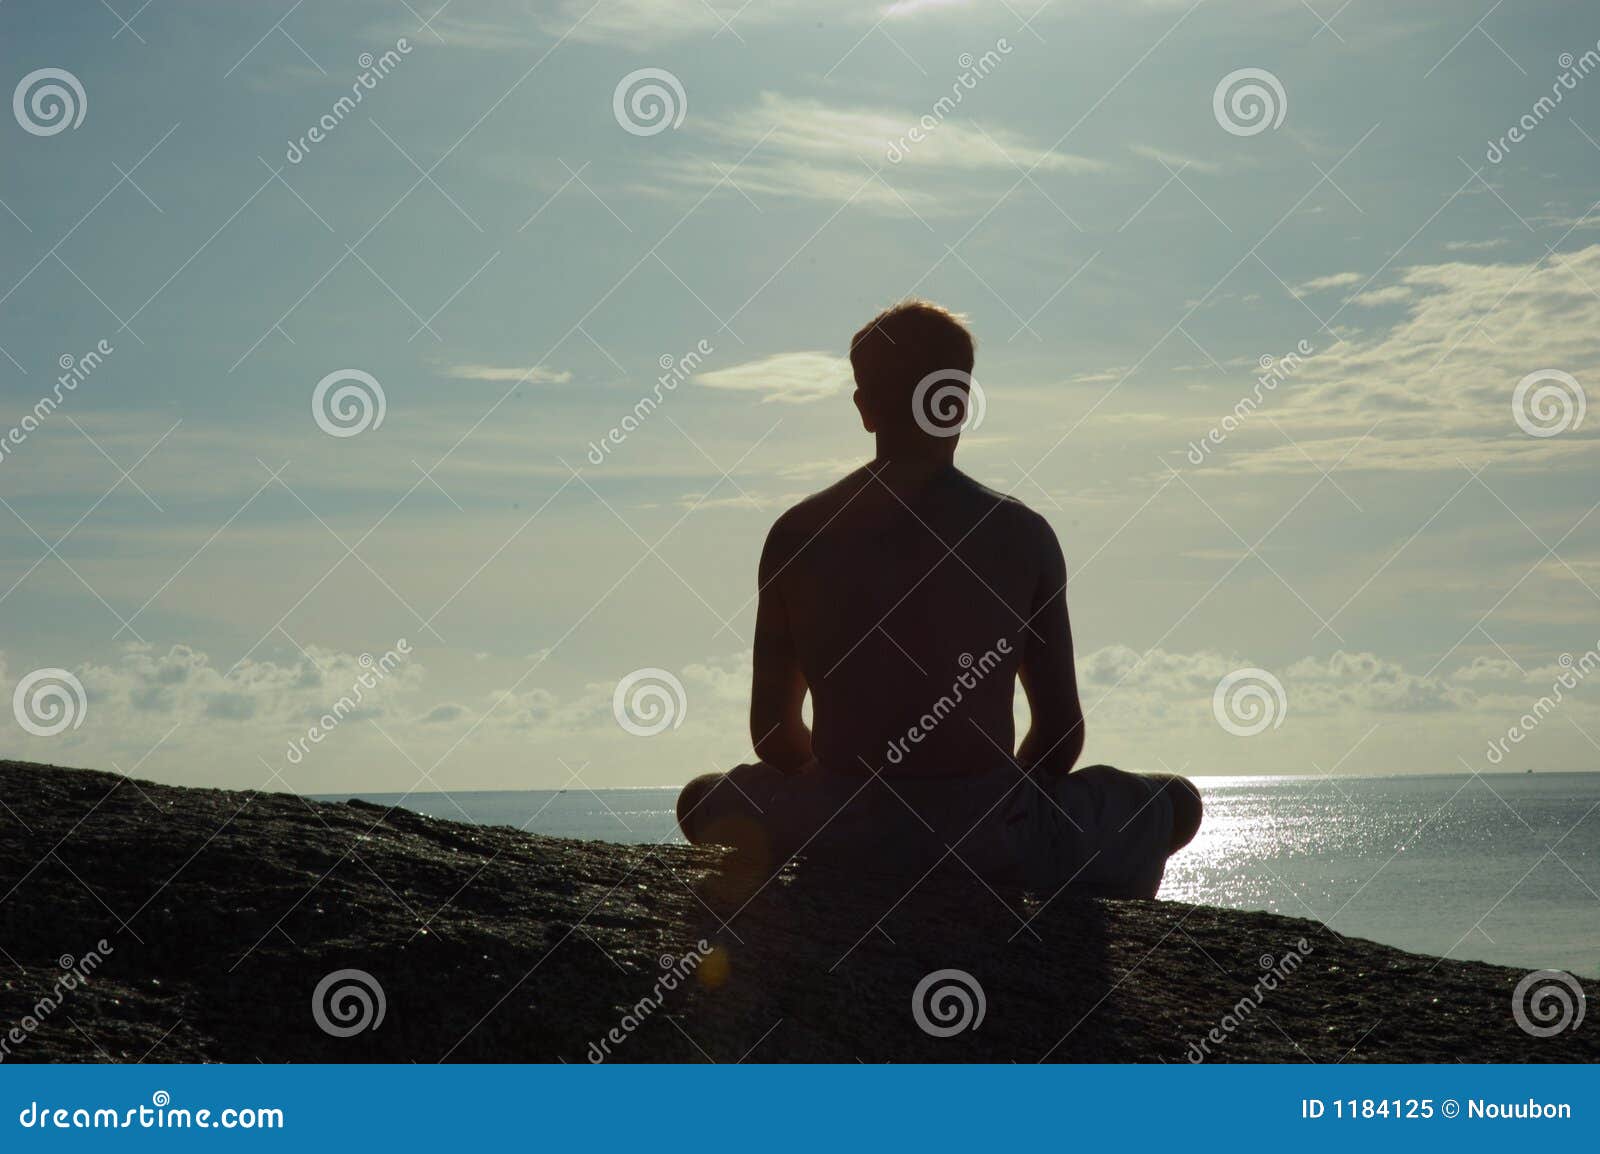 meditating at sunrise overlooking ocean